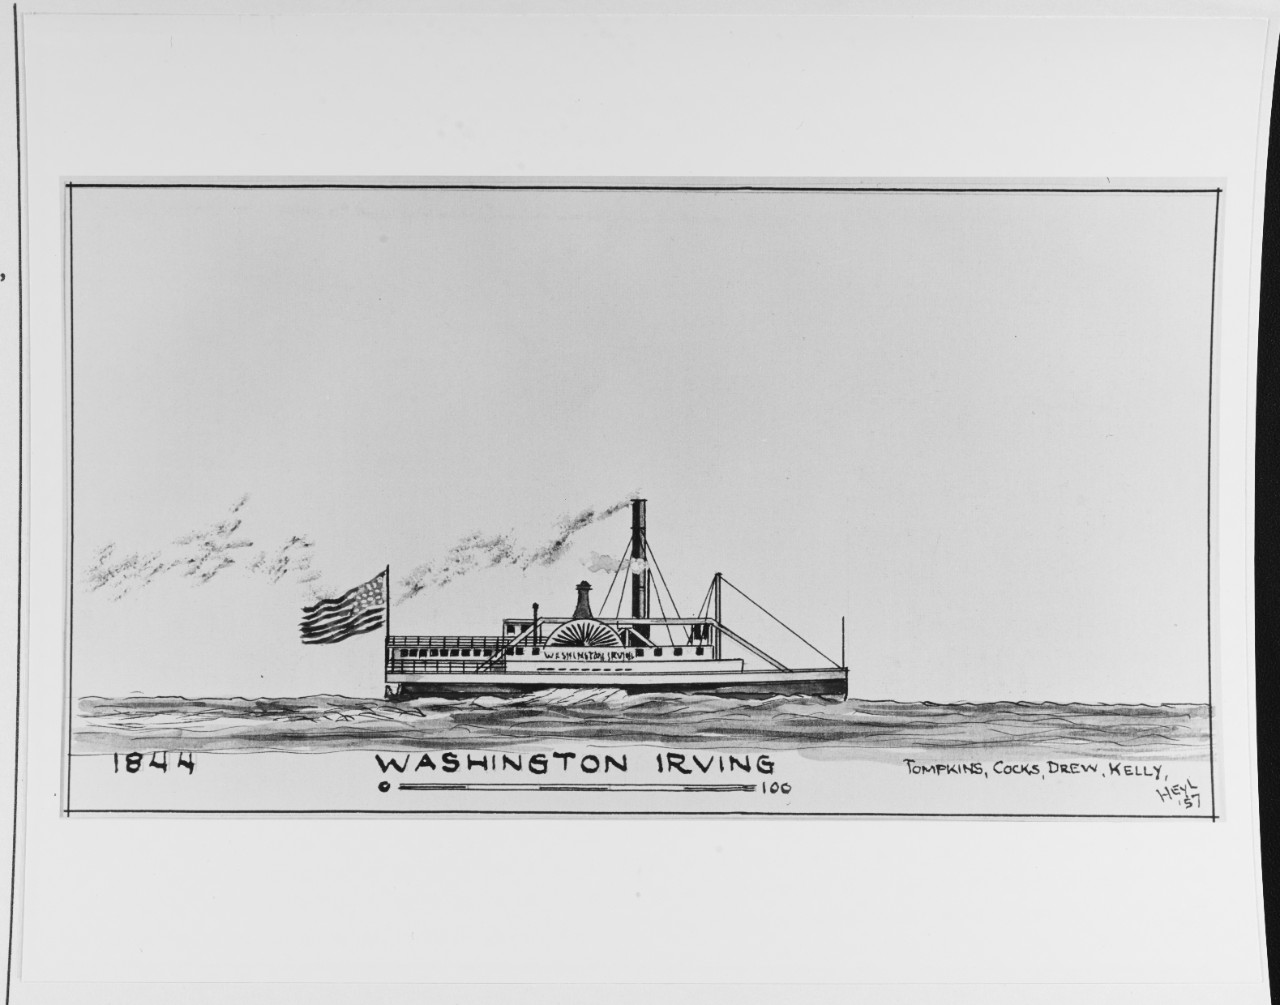 WASHINGTON IRVING (American Steamer, 1844-68)